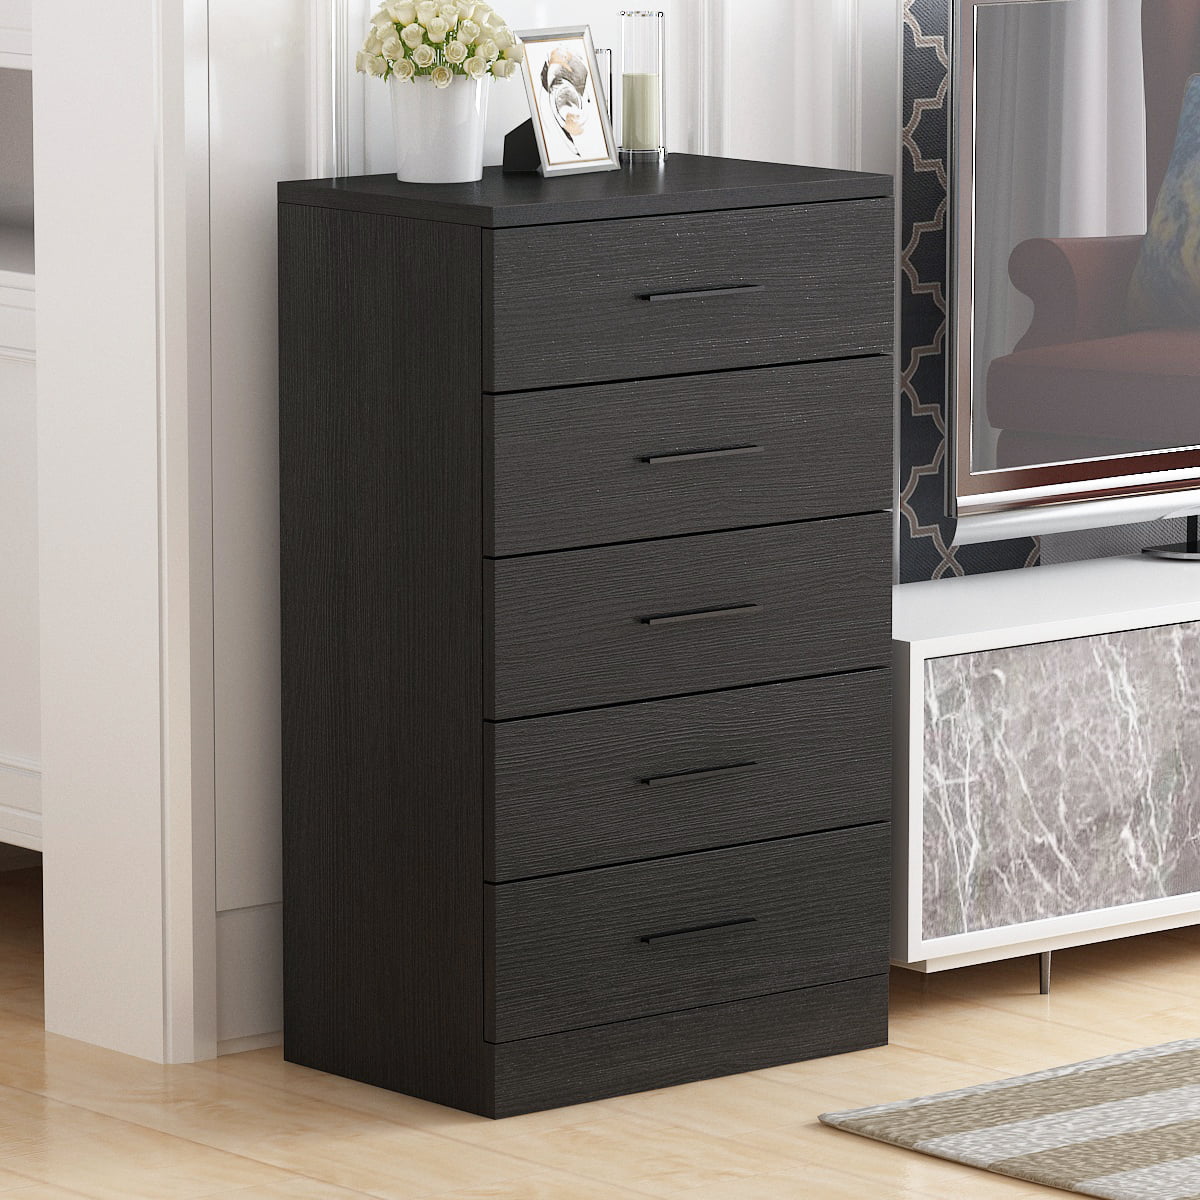 Details about   5-Drawer Dresser Chest Clothes Storage Modern Bedroom Cabinet Wood Black 